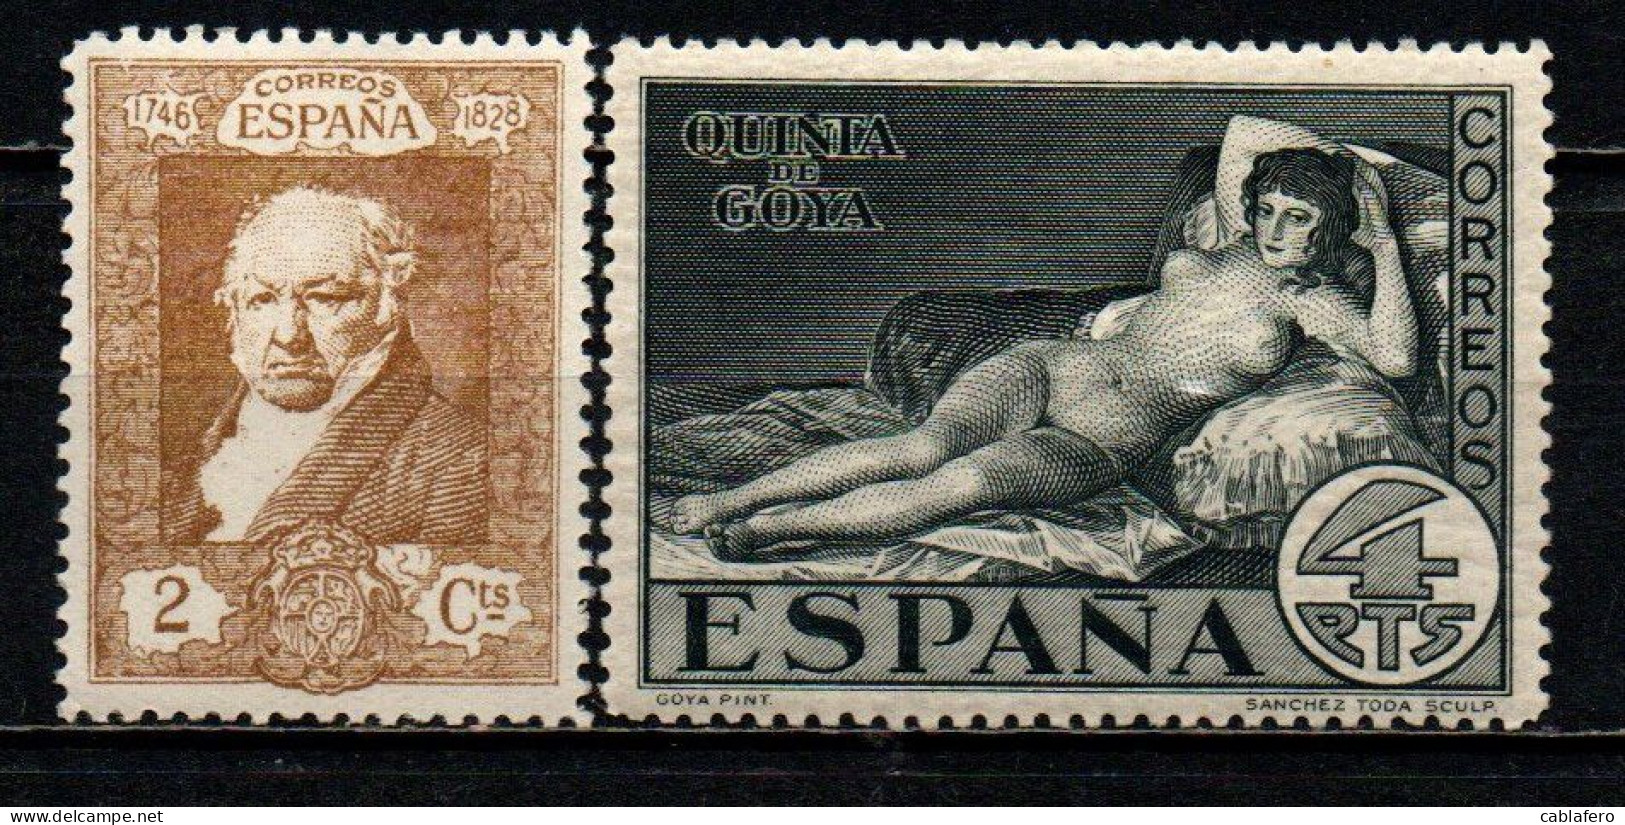 SPAGNA - 1930 - FRANCISCO GOYA - MNH - Unused Stamps